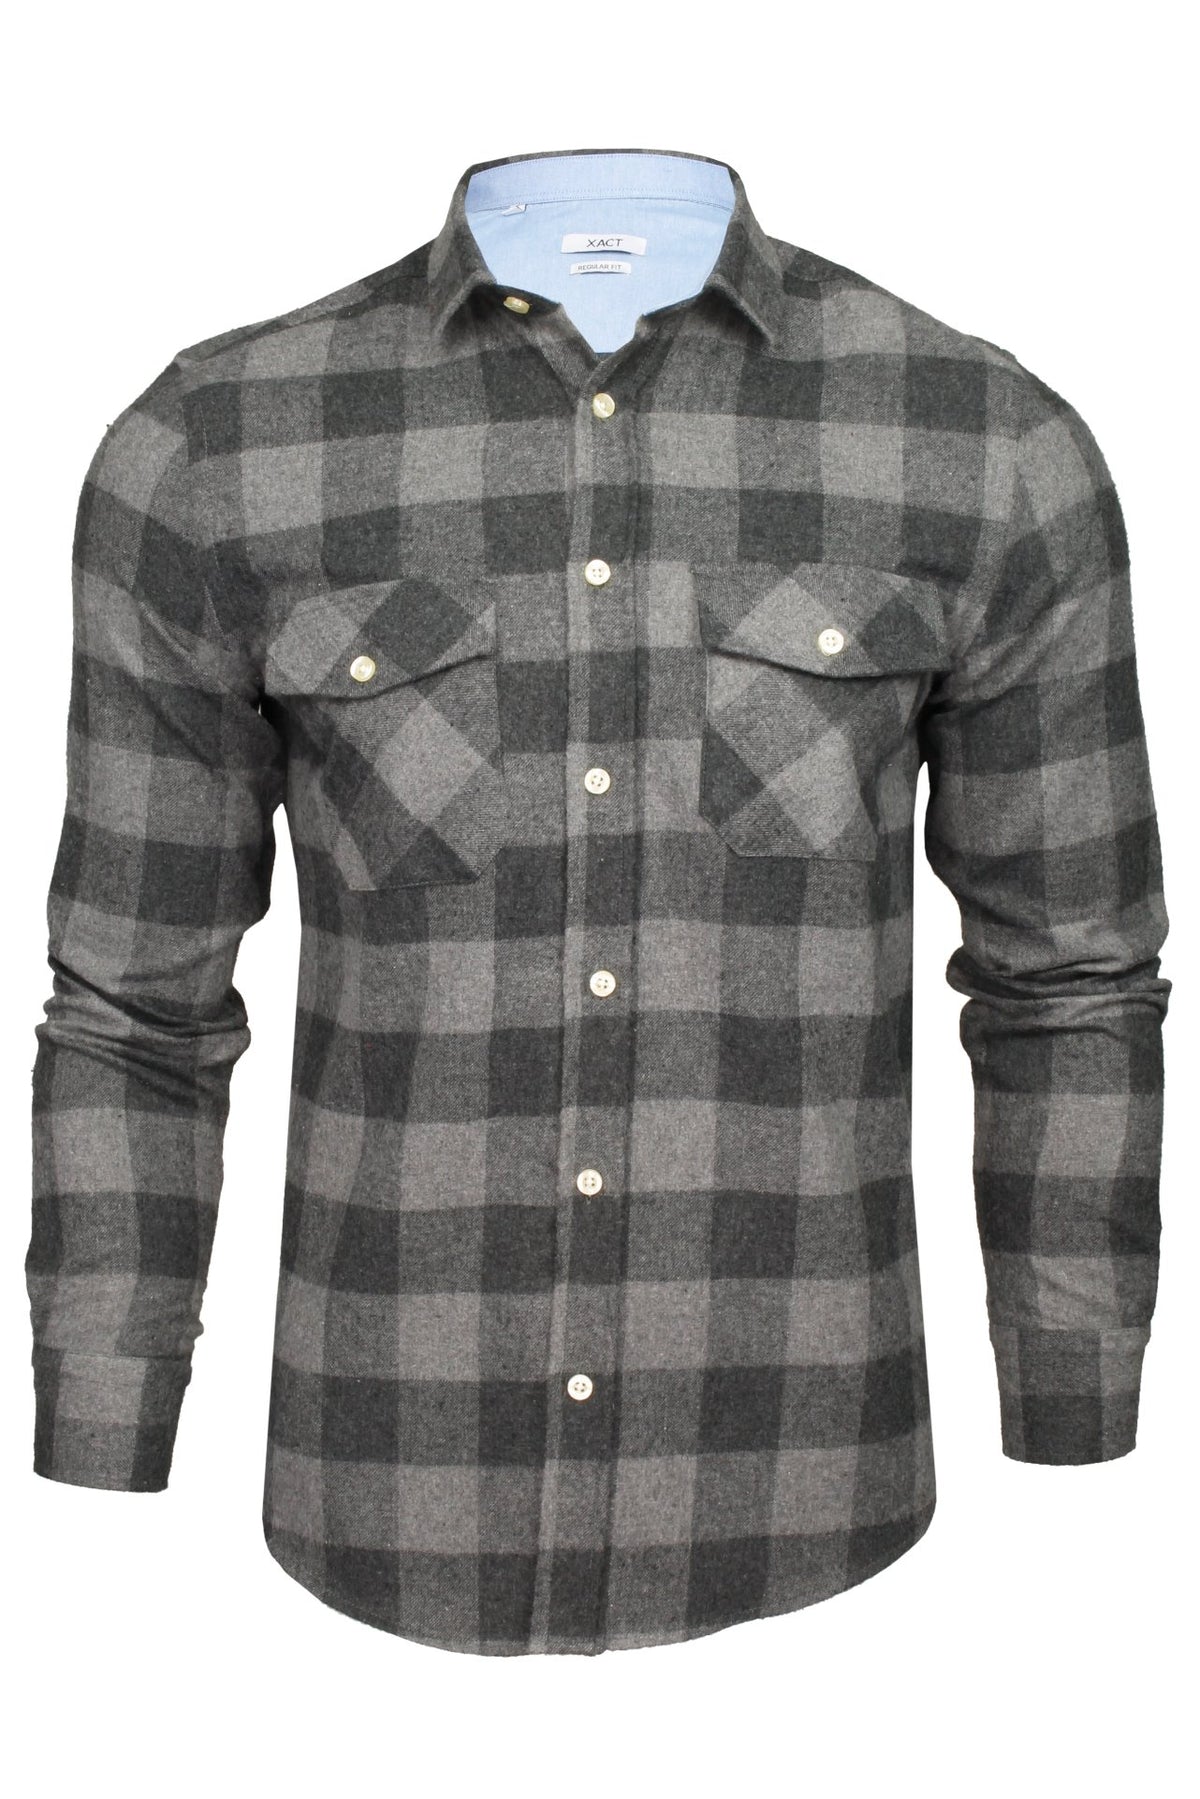 Xact Mens Soft Flannel Buffalo Check Shirt - Long Sleeved, 01, Xsh1136, Jack - Grey Melange/ Dark Grey